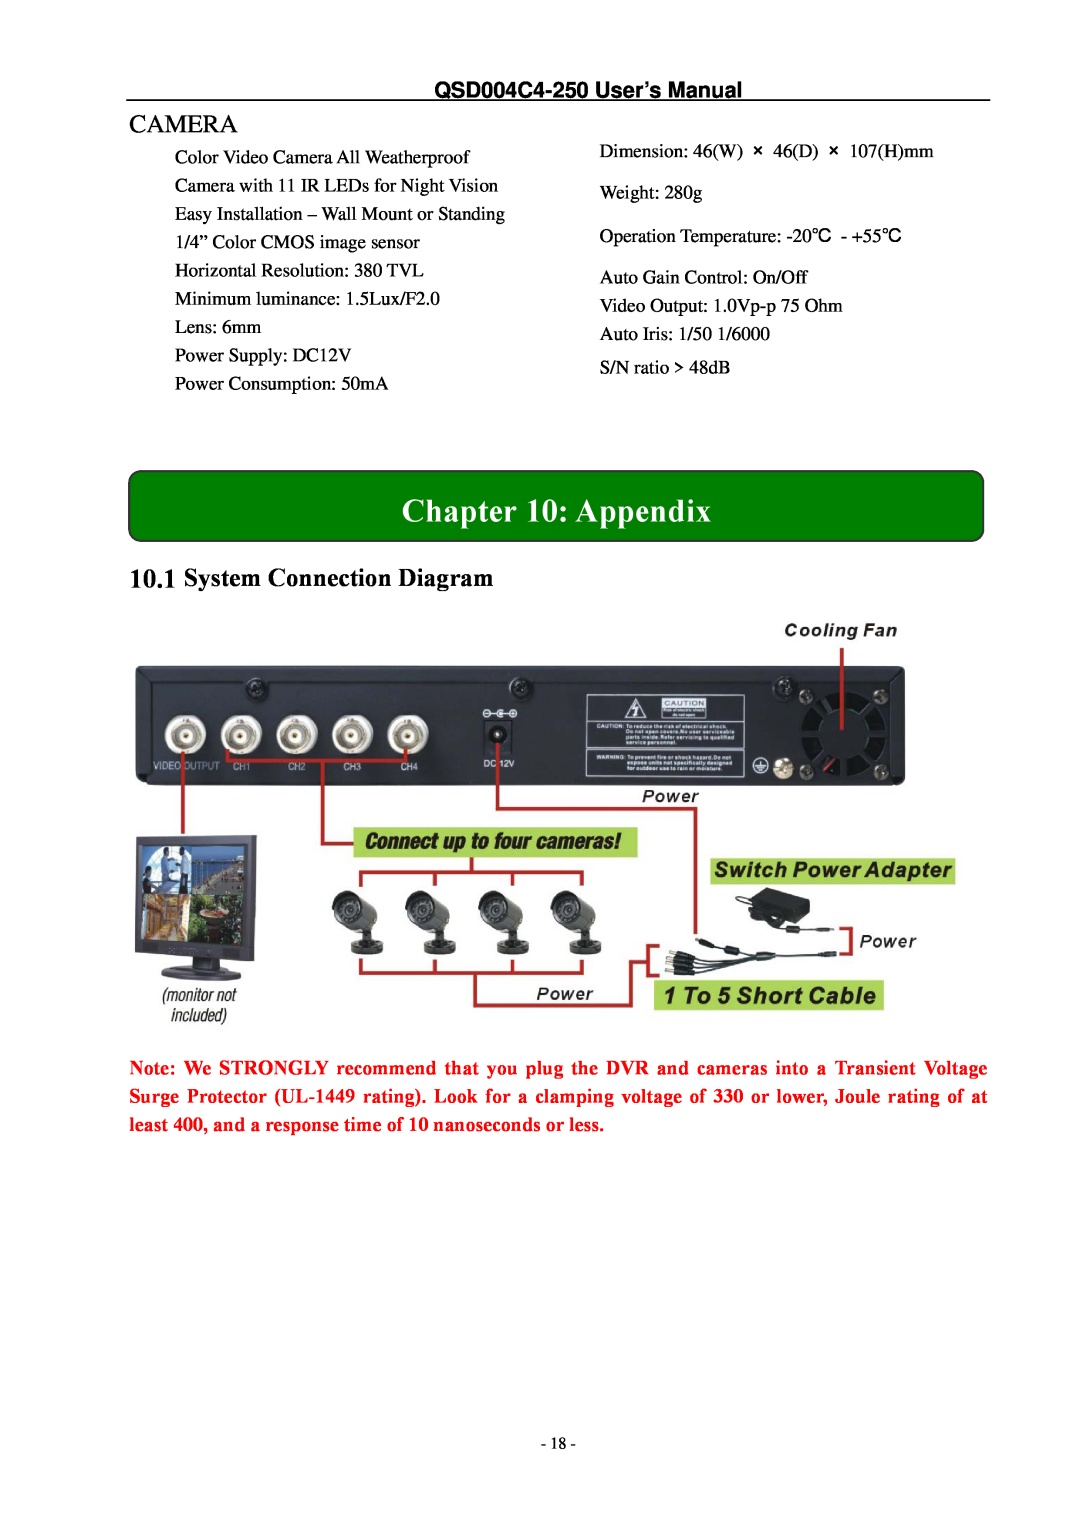 Q-See QSD004C4-250 manual Appendix, 10.1System Connection Diagram 